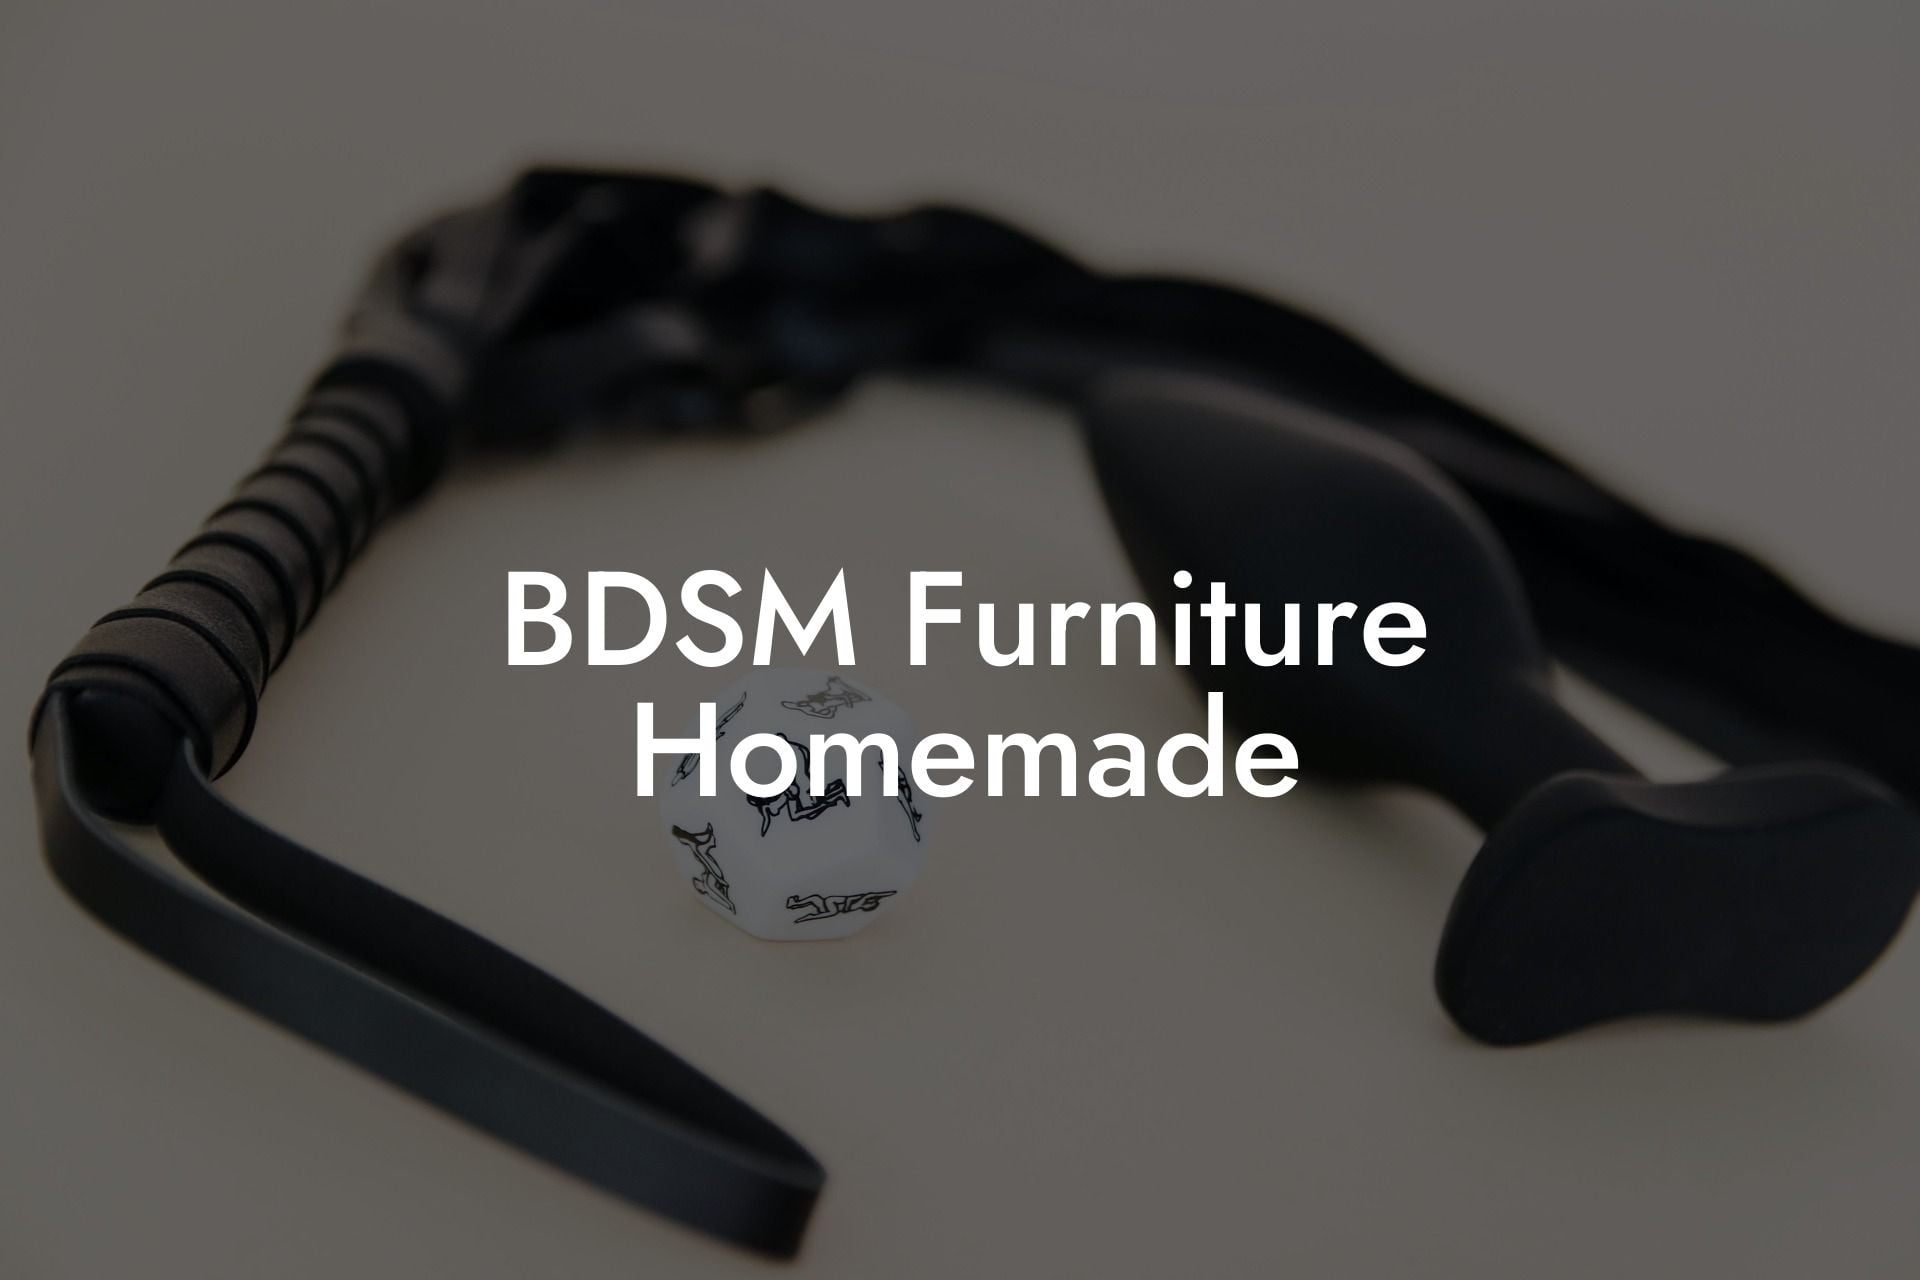 BDSM Furniture Homemade